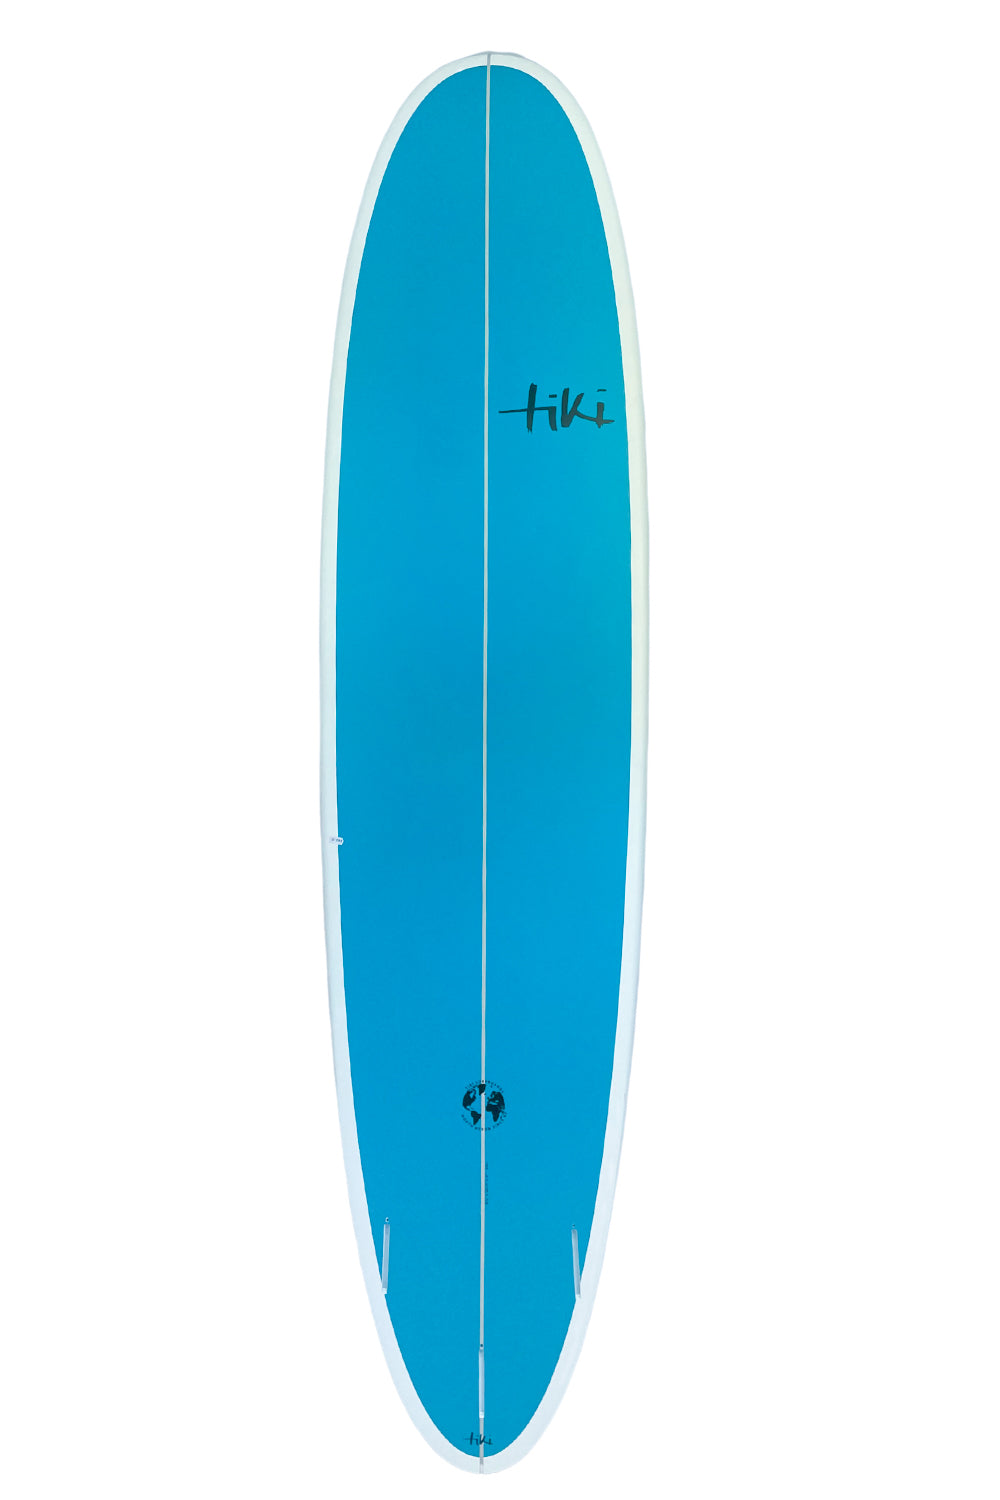 Tiki Evolution Glide Surfboard - Tahitian Teal Deck